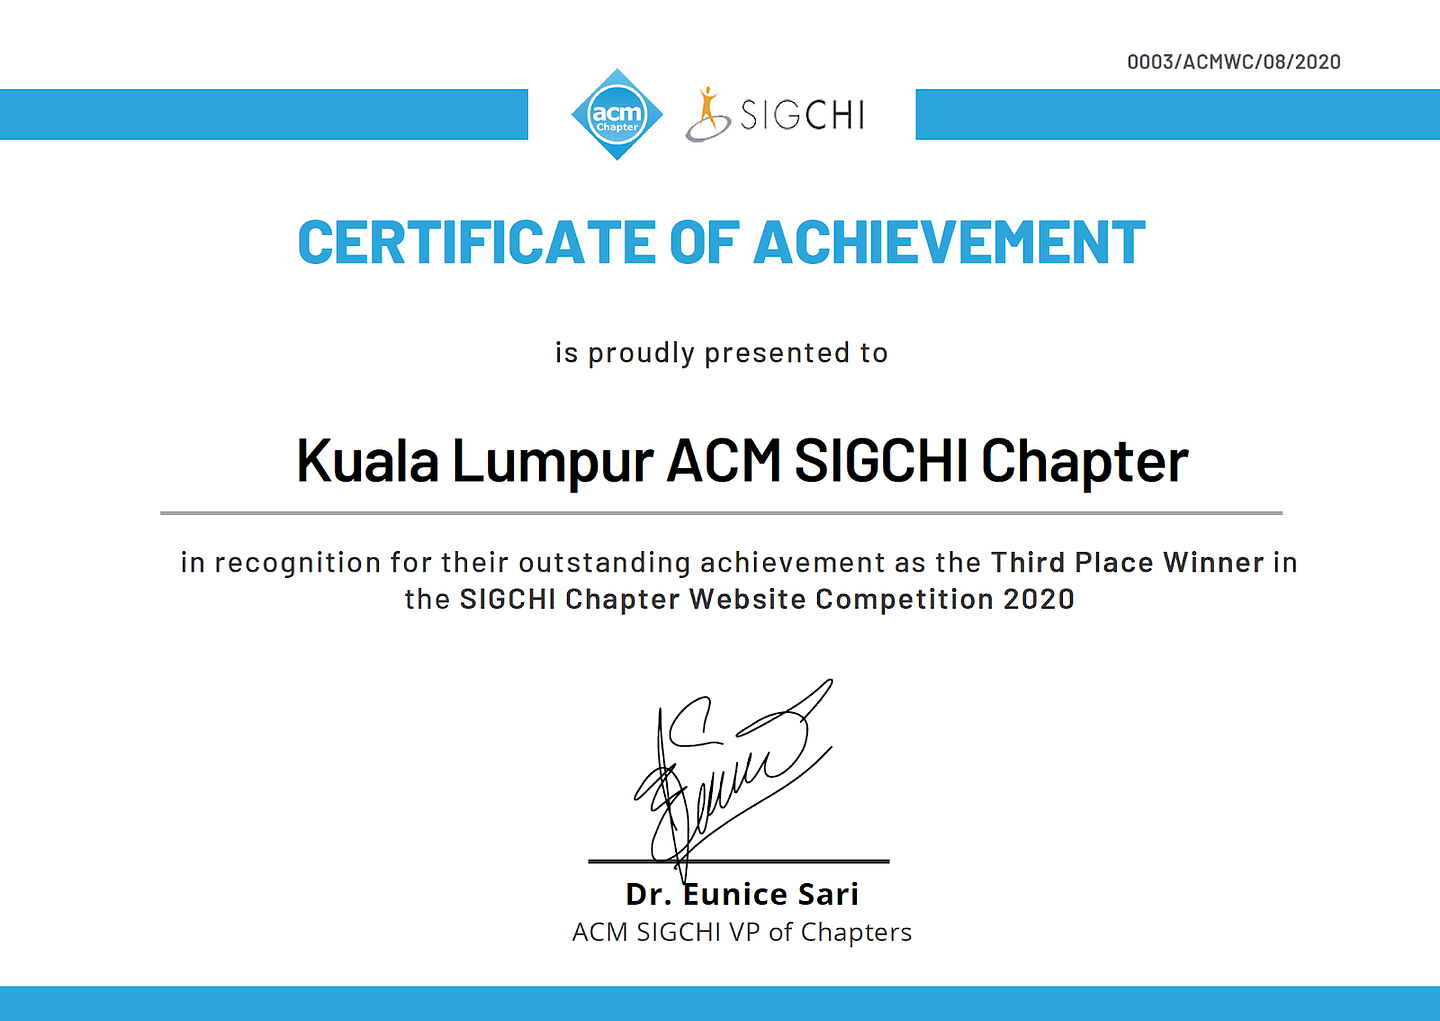 Third Place Winner Certificate of Achievement for Kuala Lumpur ACM SIGCHI Chapter